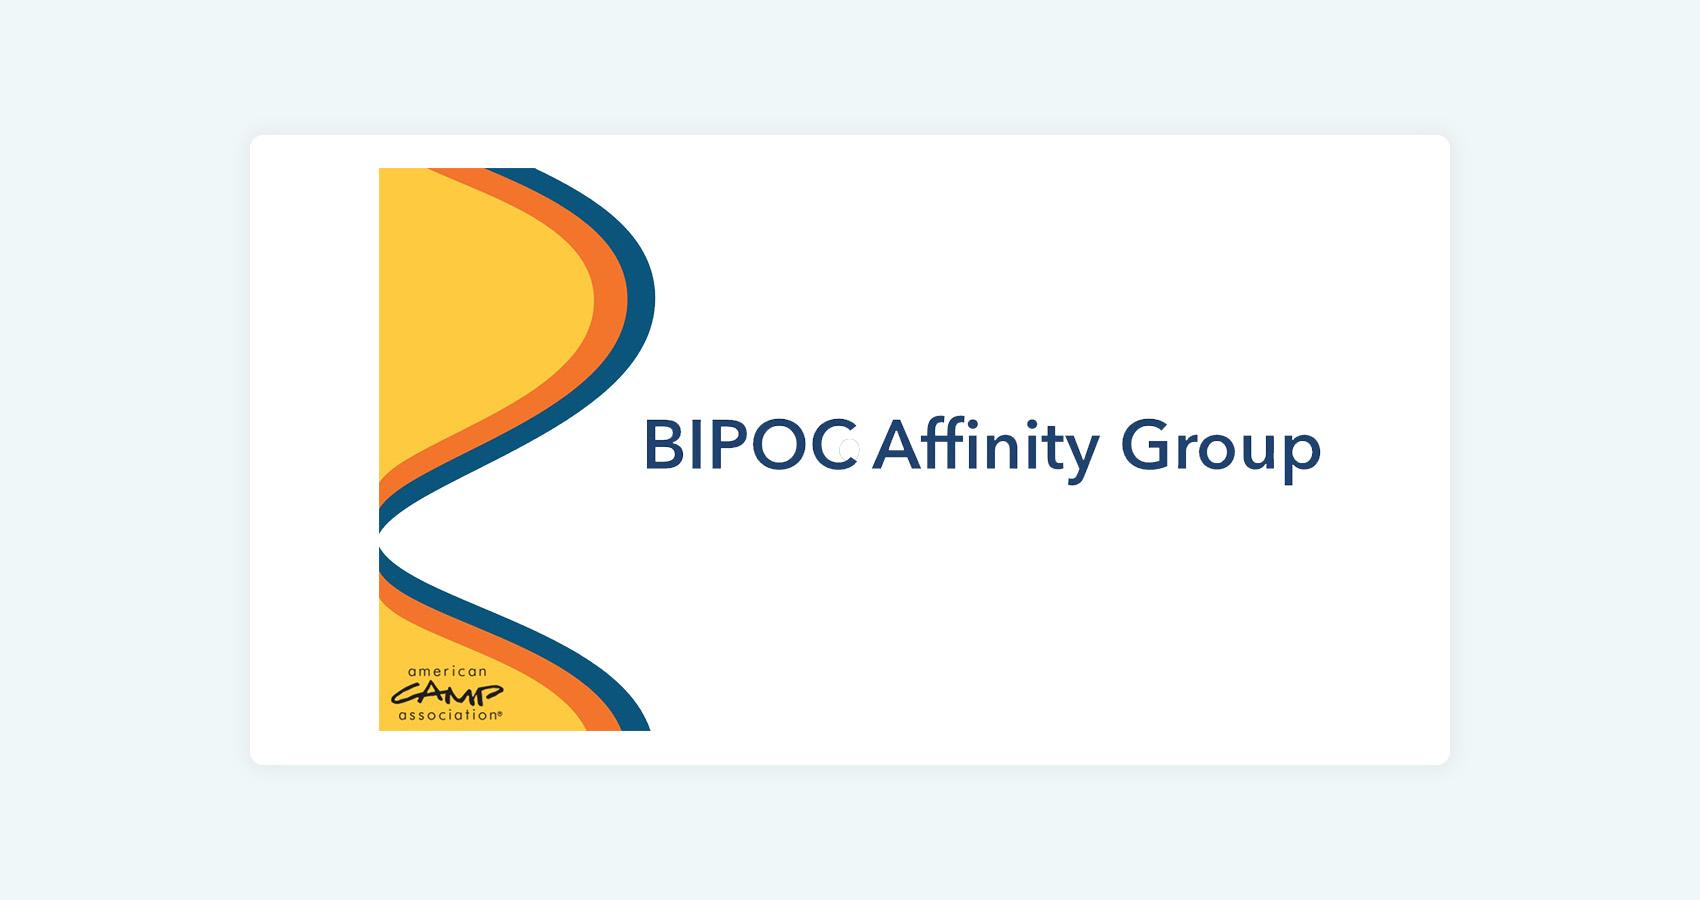 BIPOC Affinity Group illustration